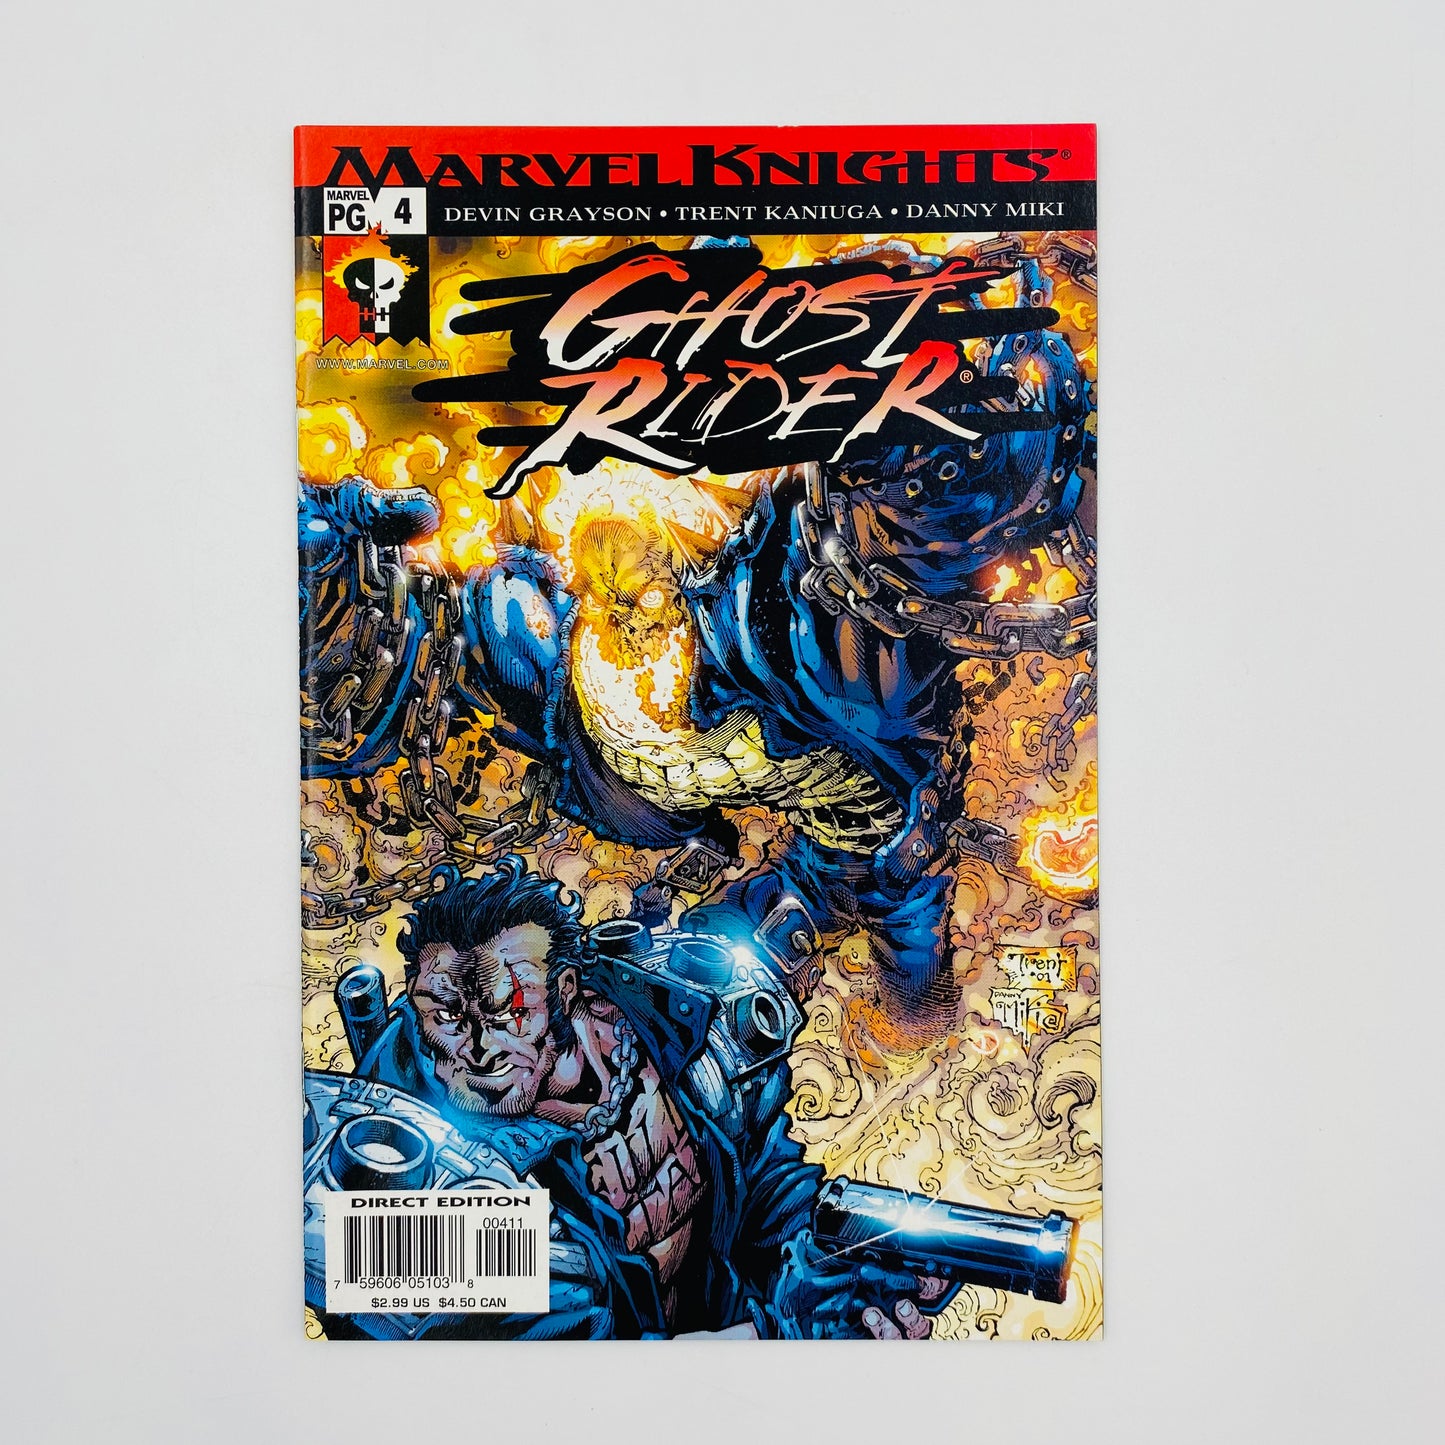 Ghost Rider #1-6 “The Hammer Lane” (2001-2002) Marvel Knights